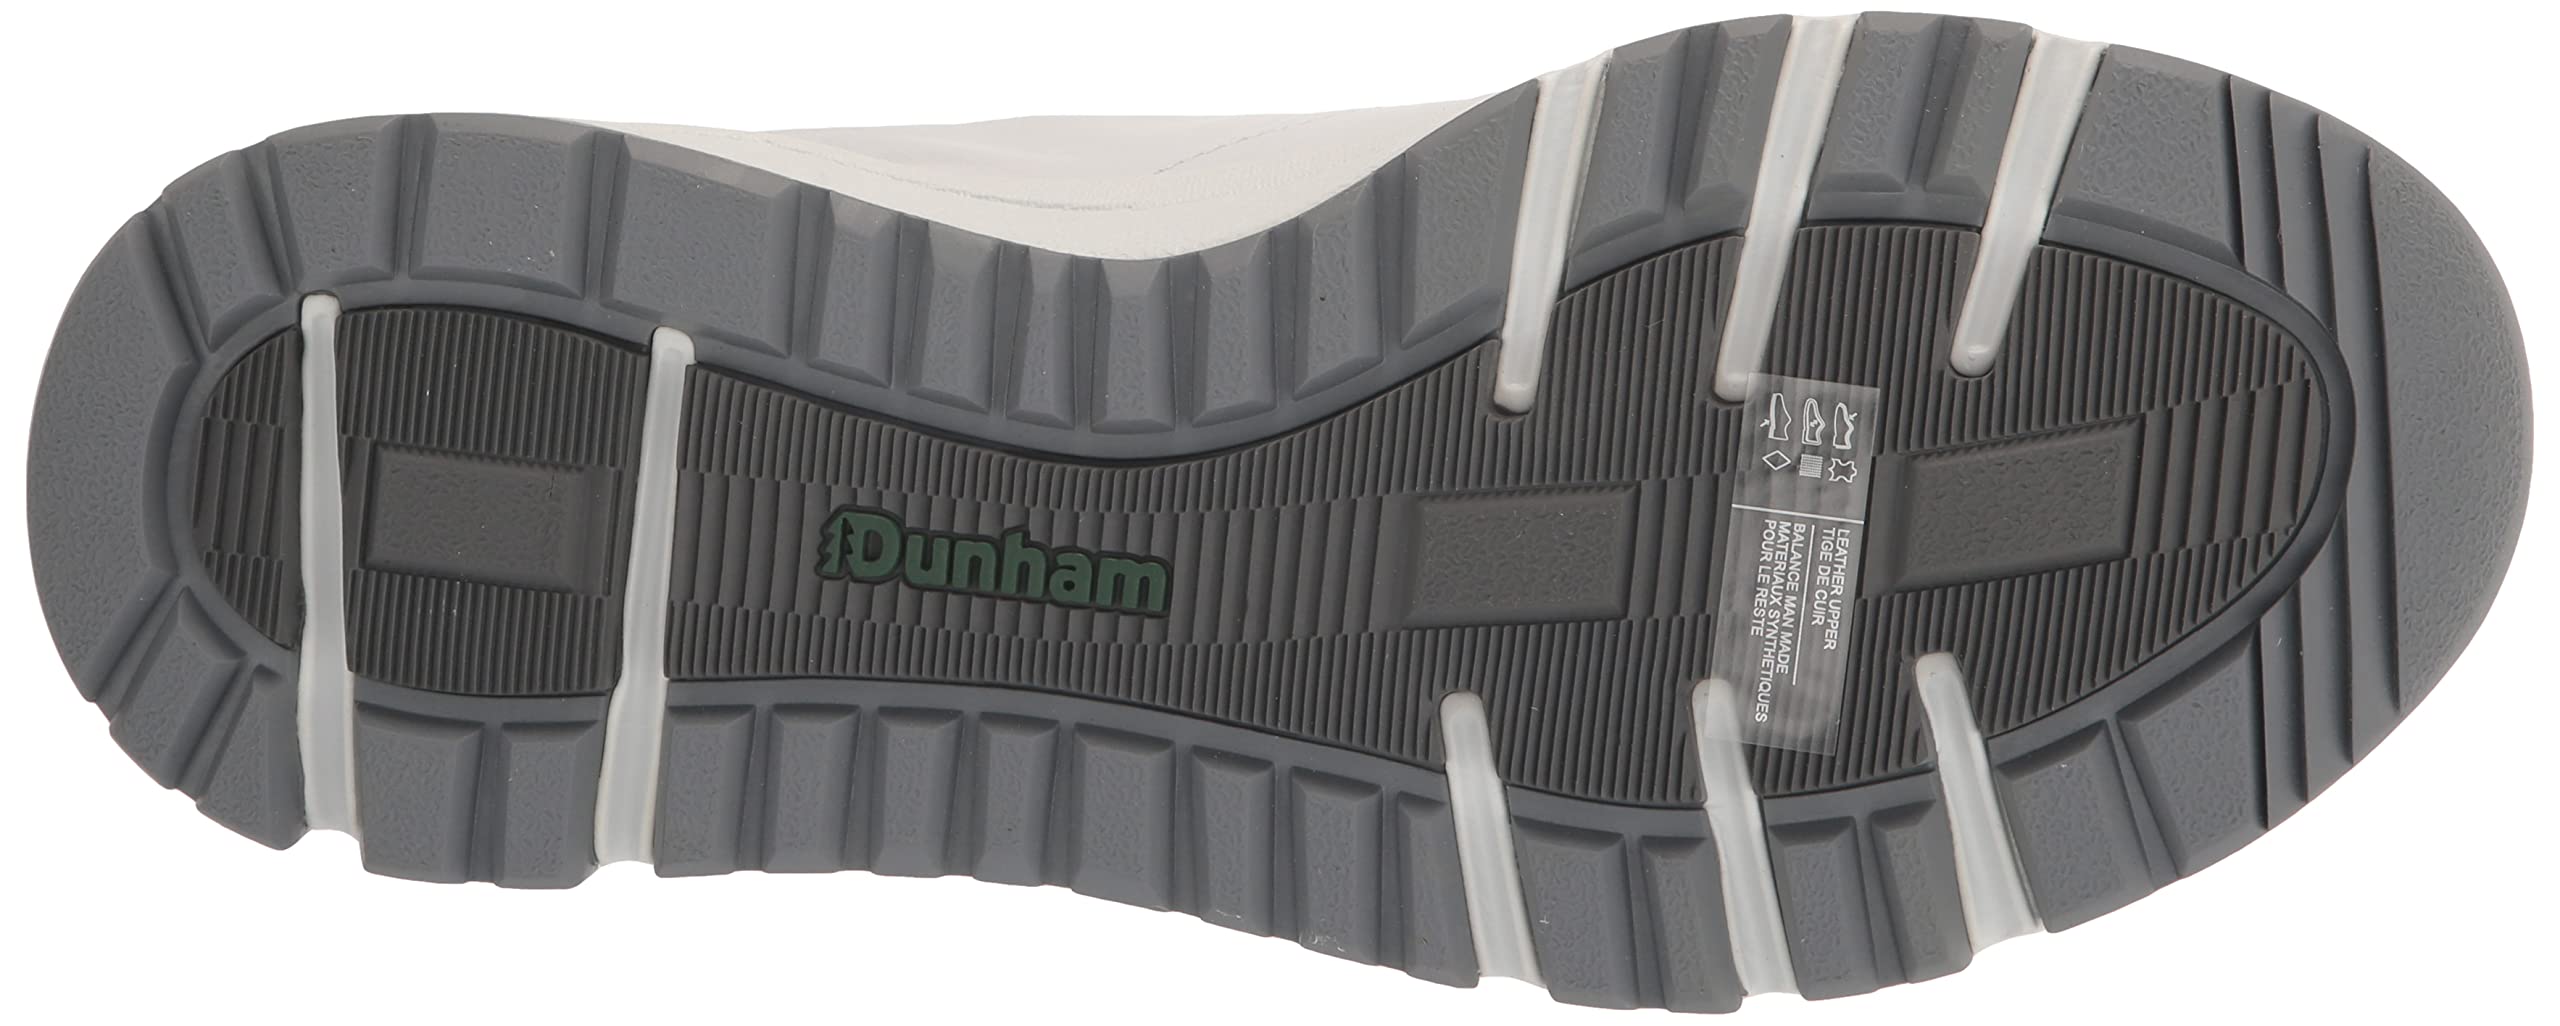 Dunham Men's Glastonbury Ubal Ii Sneaker